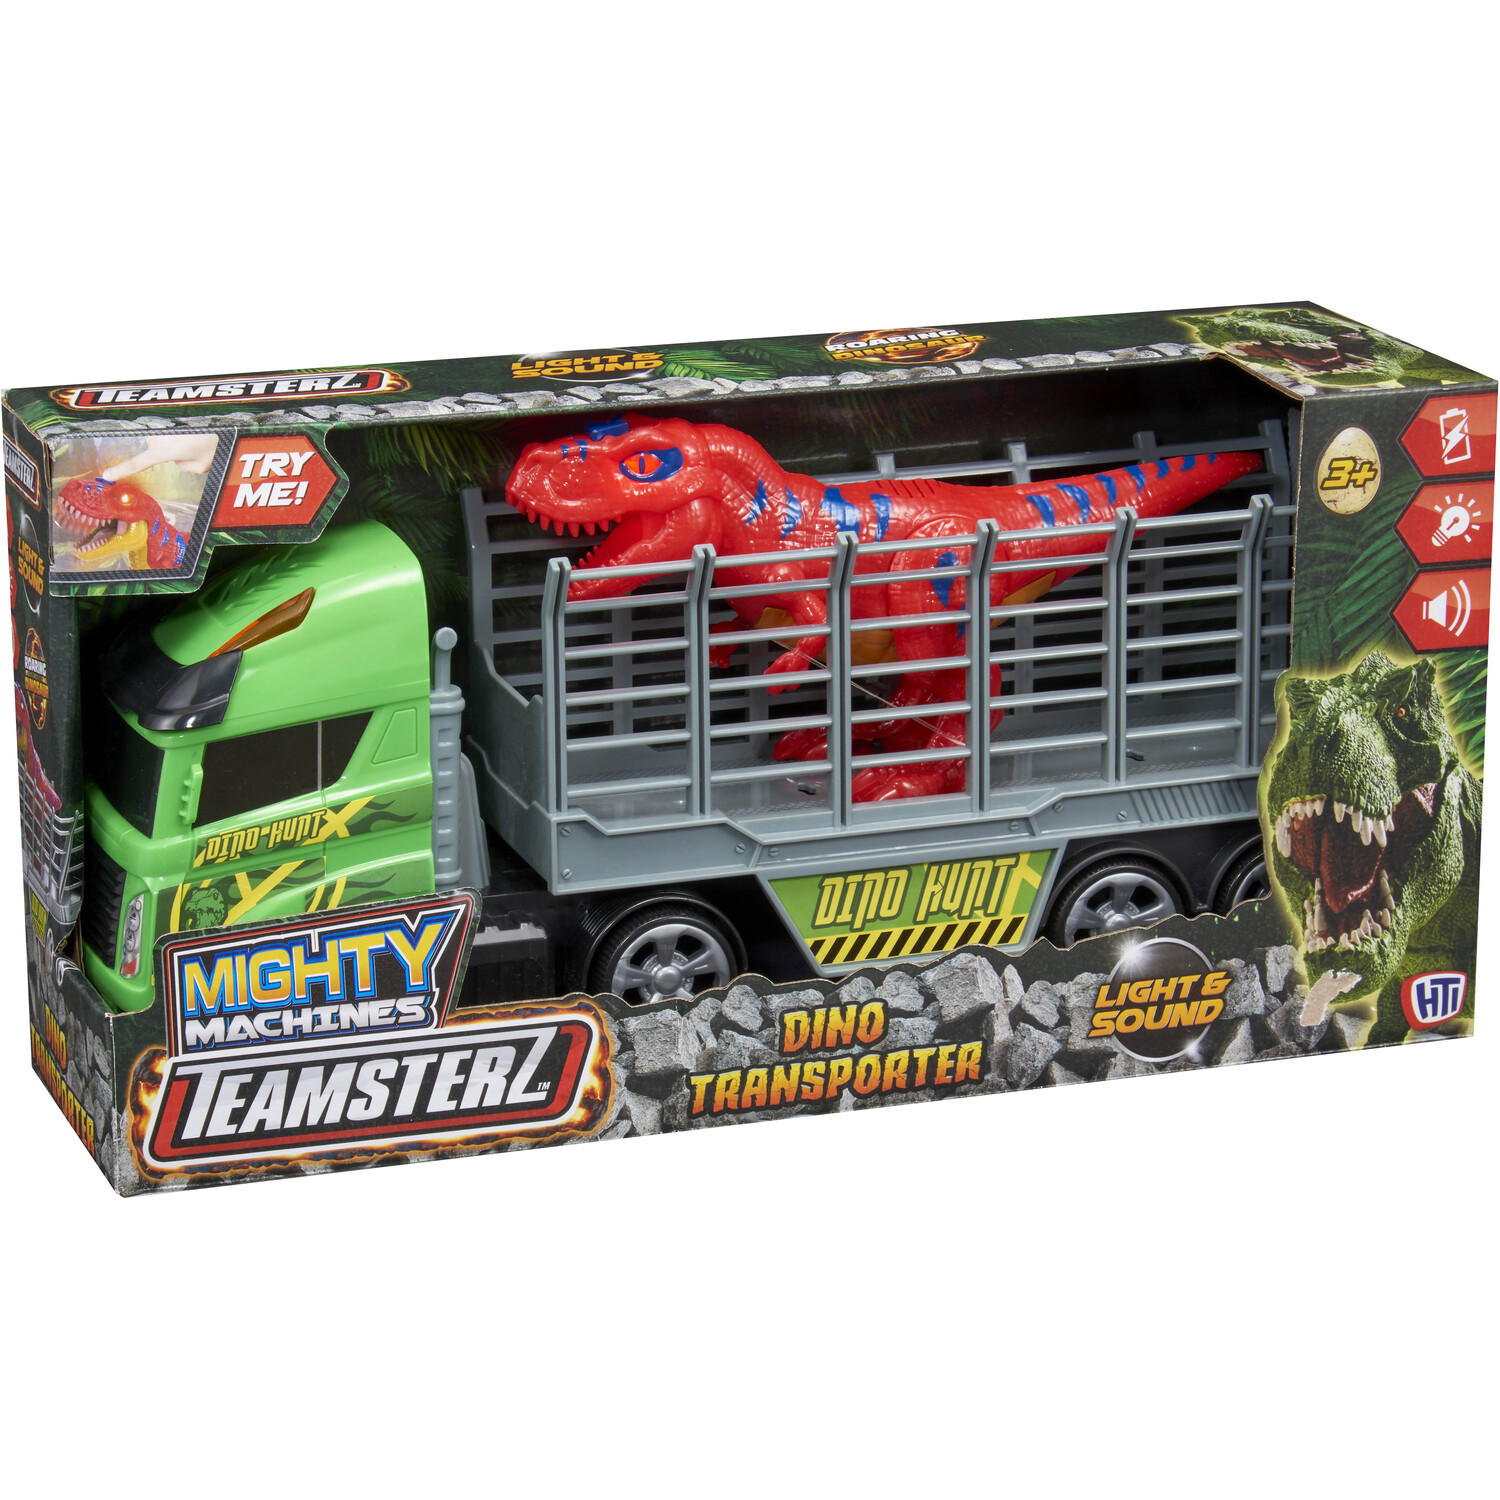 Teamsterz Light and Sound Dinosaur Transporter Toy Image 2